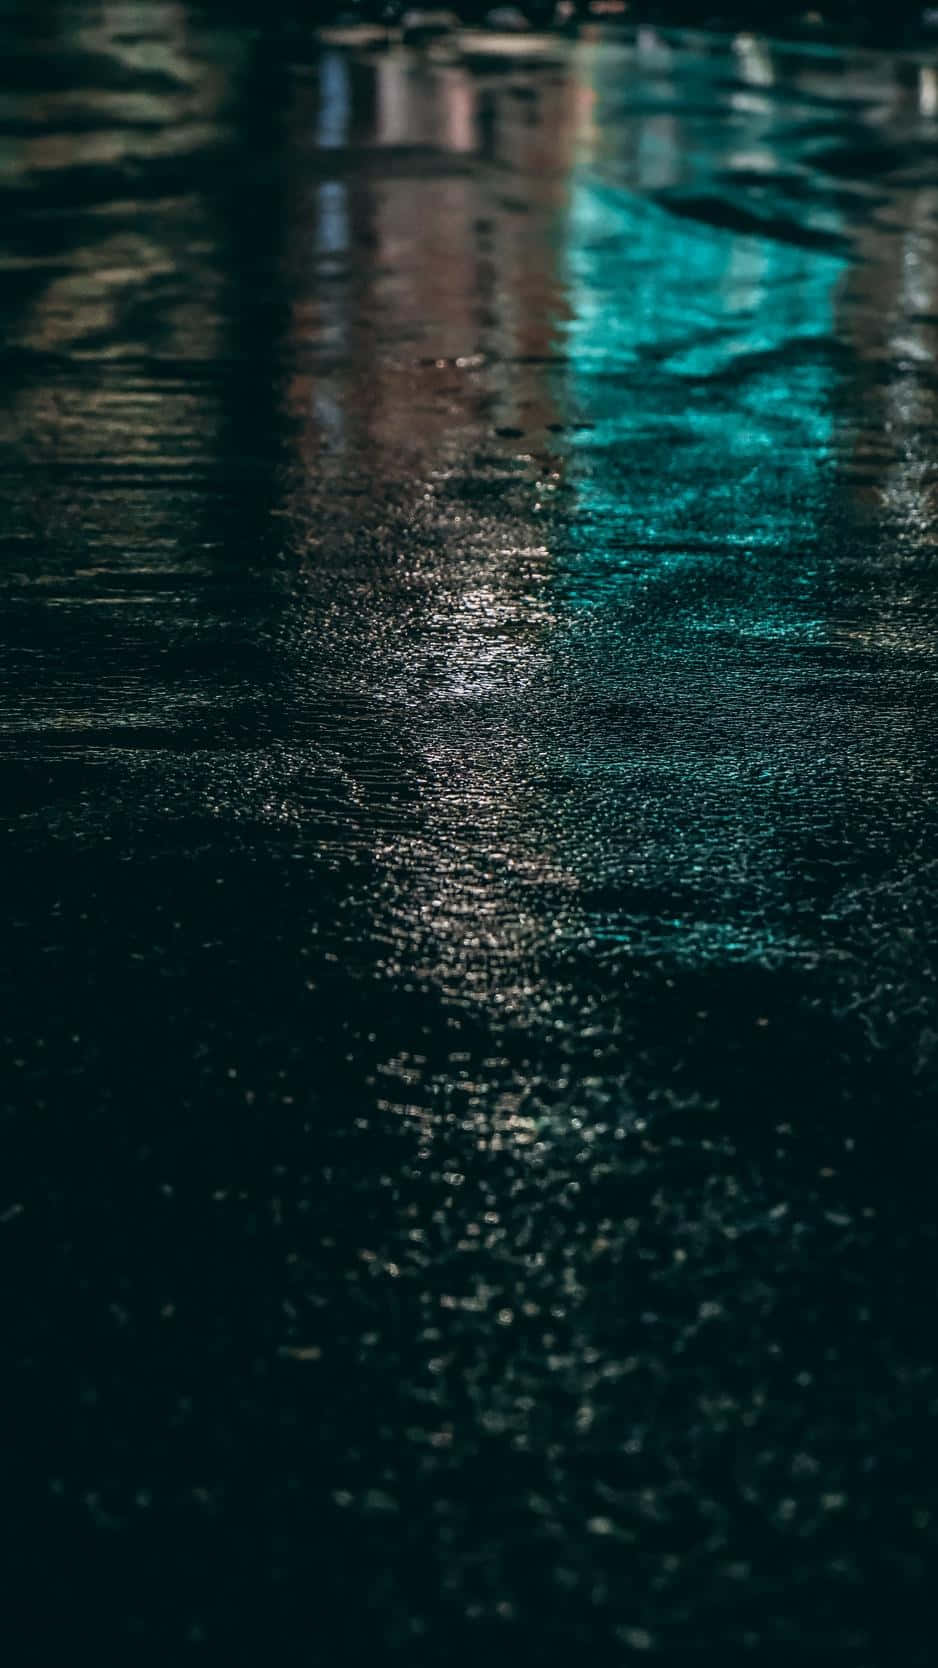 A City At Night With A Rainy Street